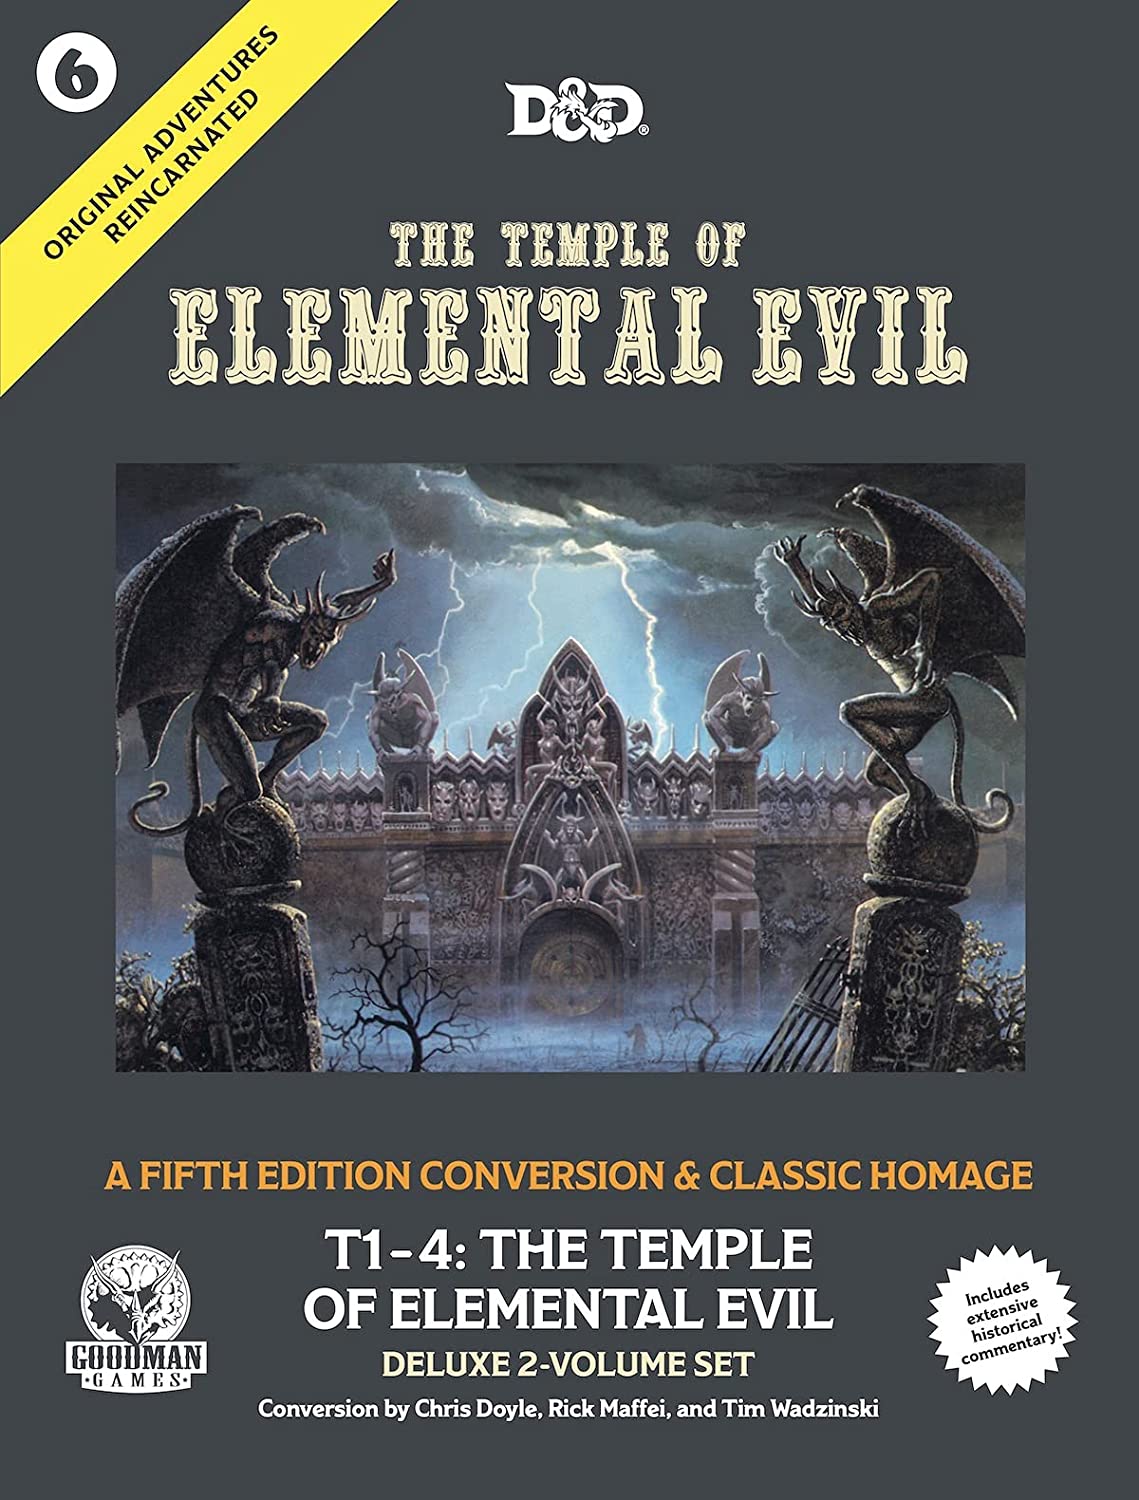 Original Adventures Reincarnated #6: The Temple of Elemental Evil: Deluxe 2-Volume Set